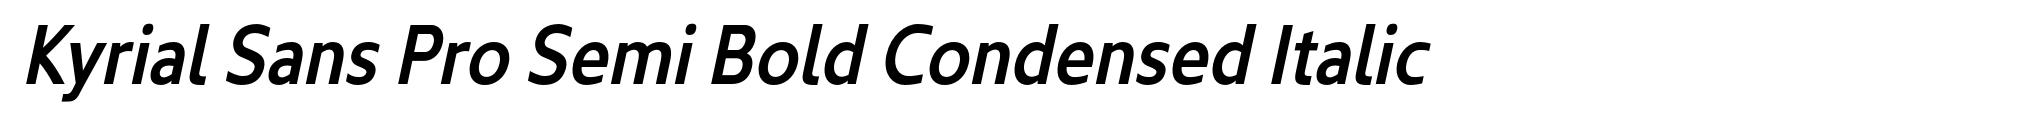 Kyrial Sans Pro Semi Bold Condensed Italic image